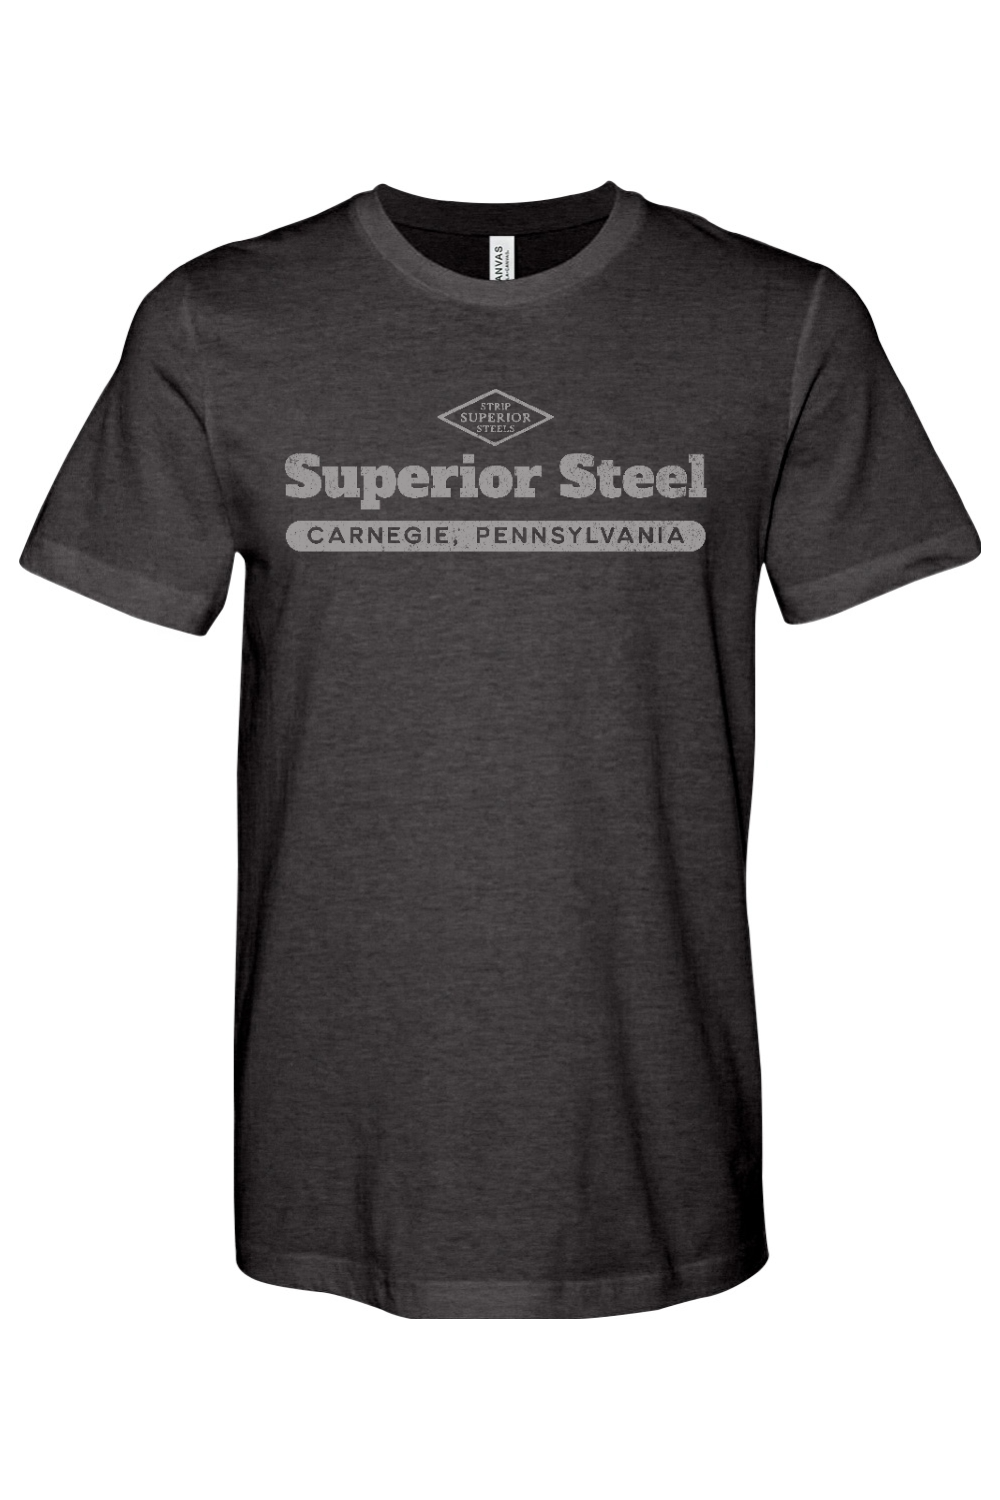 Superior Steel - Carnegie, PA - Yinzylvania